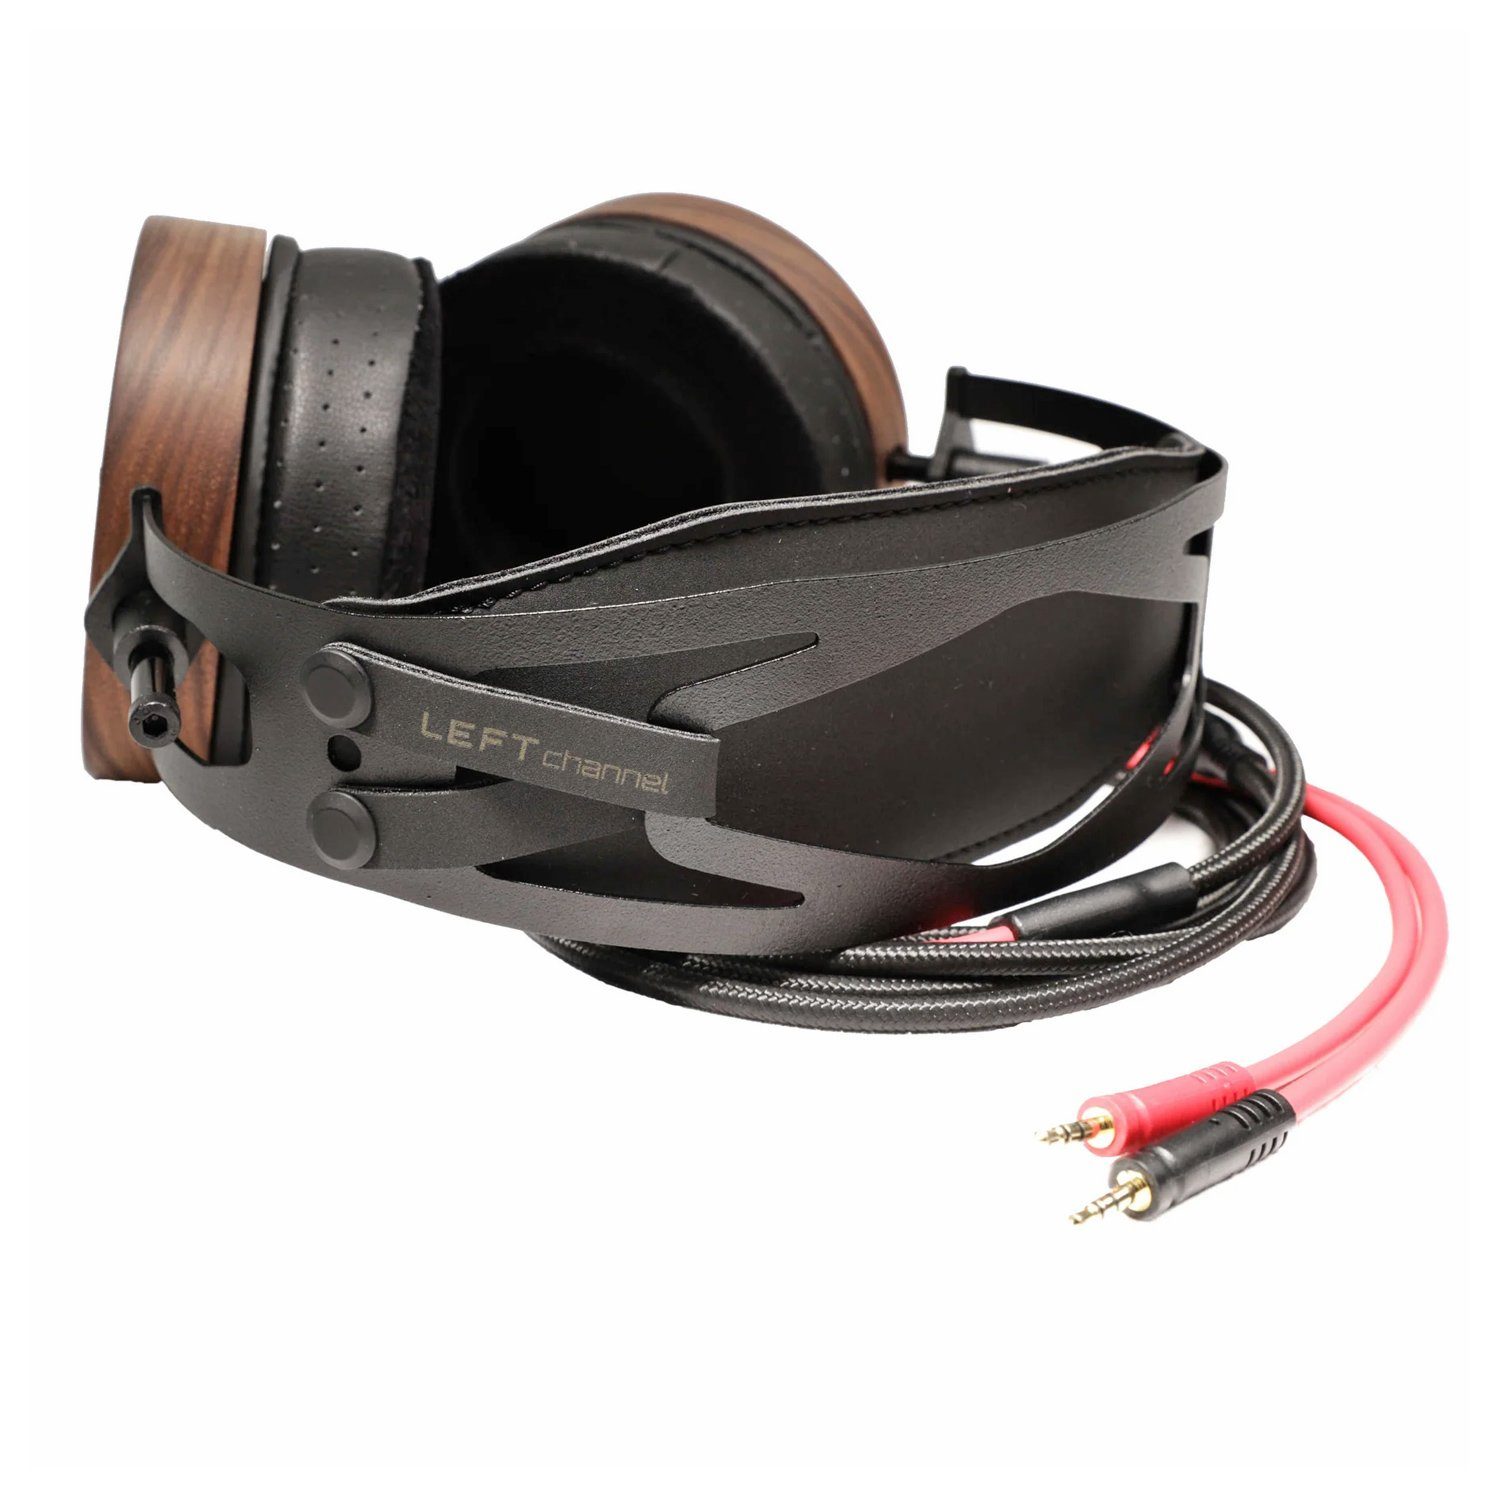 Musik, Studio-Kopfhörer für von Over-Ear-Kopfhörer Tisch-Stativ) S5X Audio Mixing/Mastering (für von OLLO offener Mixing/Mastering mit binauraler Musik, binauraler